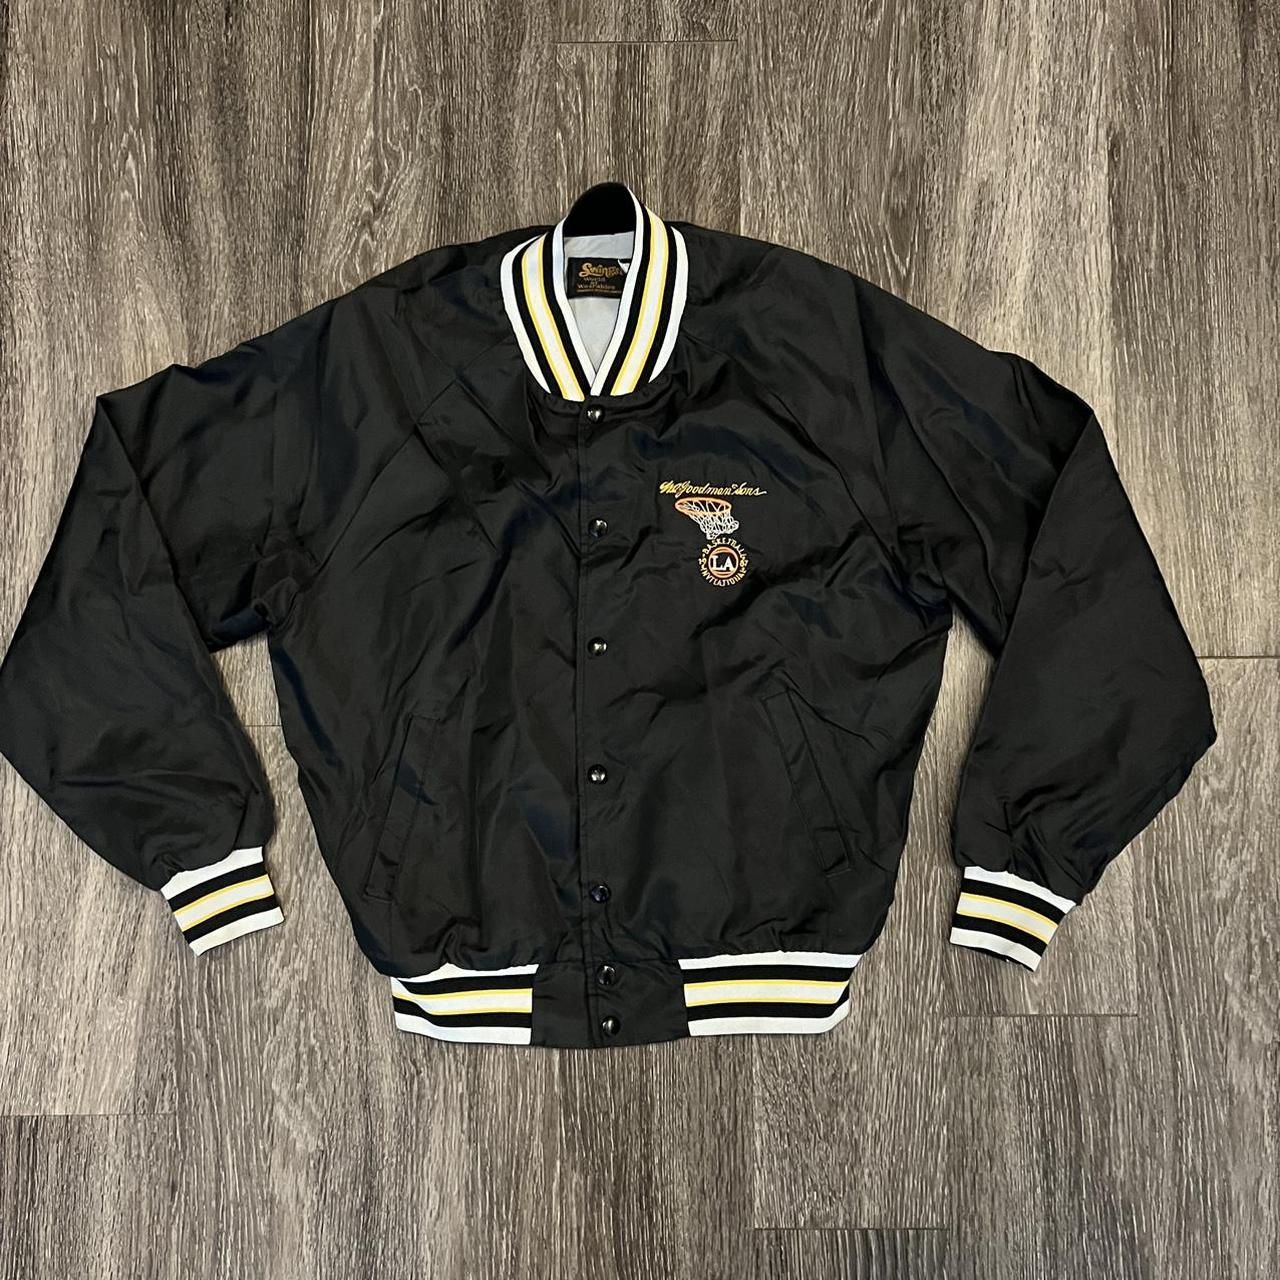 Vintage 1987 Satan bomber basketball jacket size... - Depop